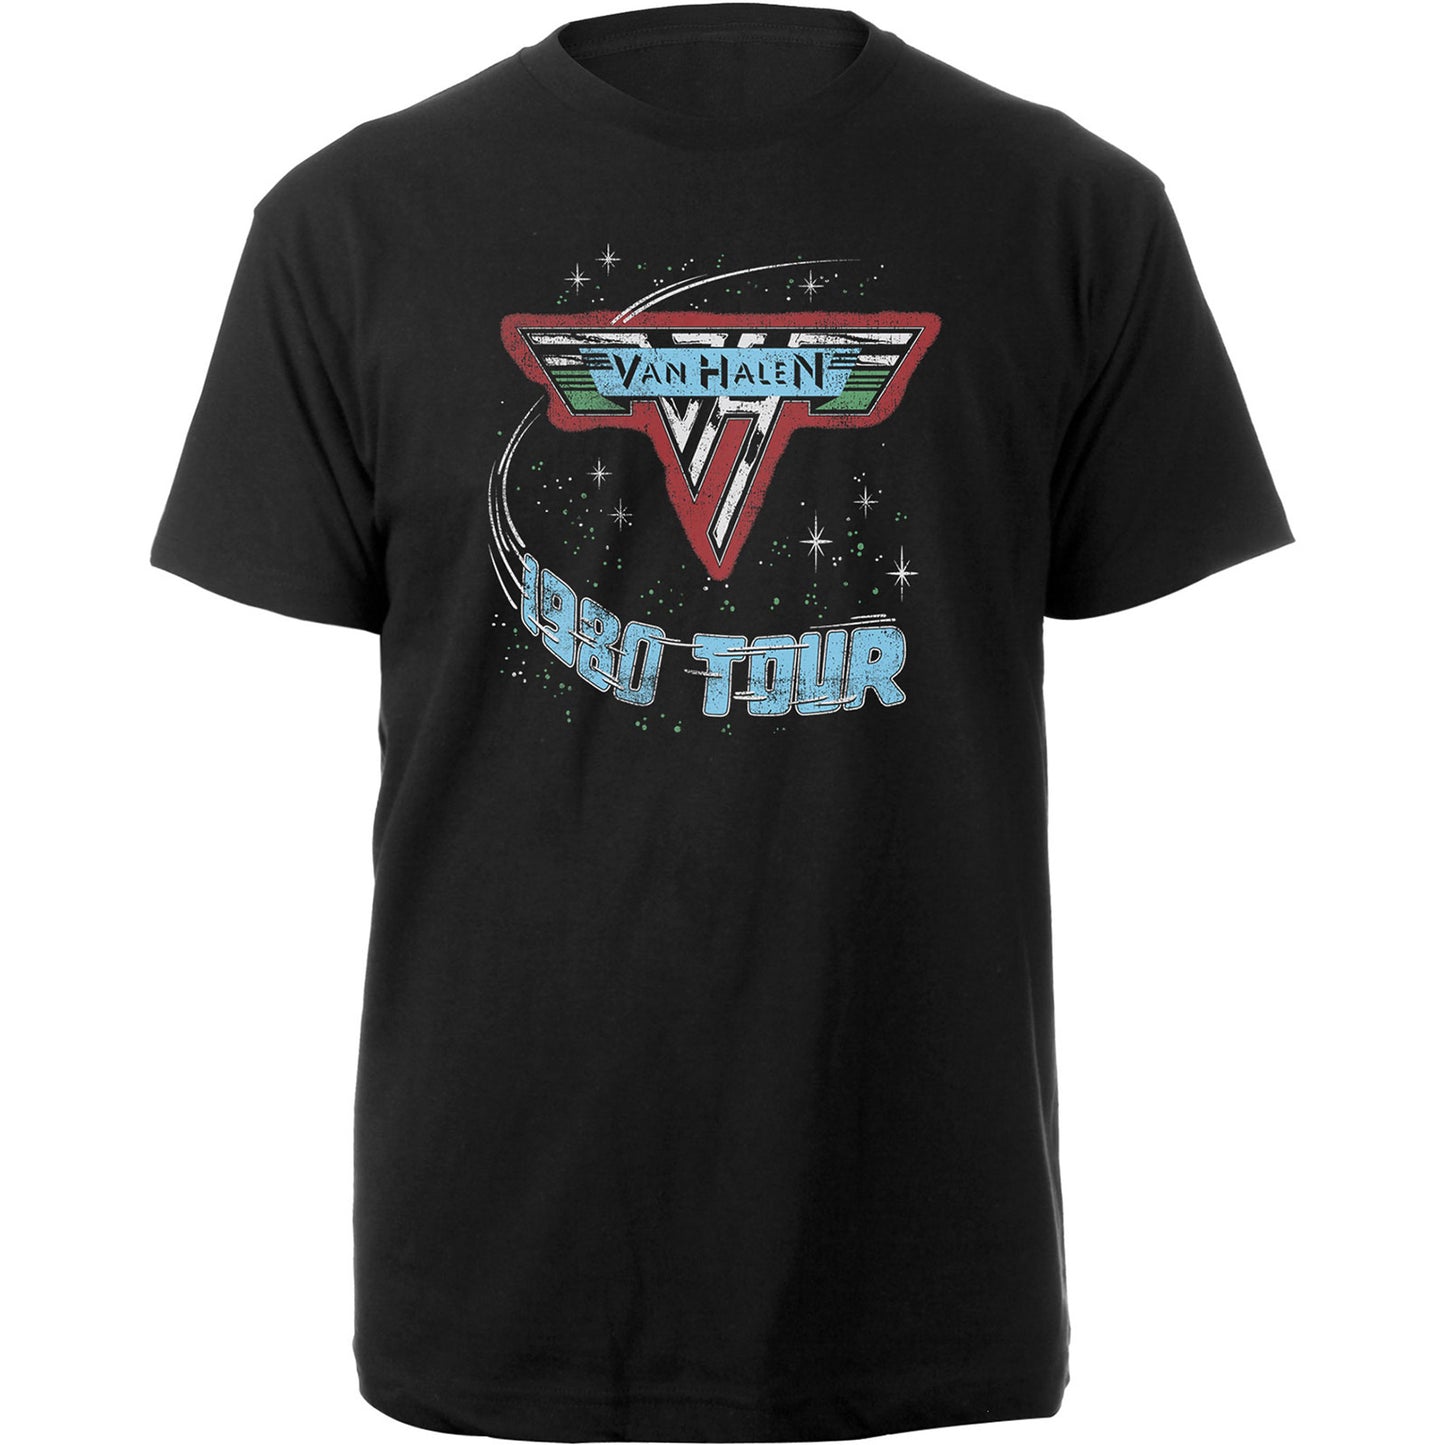 Van Halen 1980 Tour T-Shirt